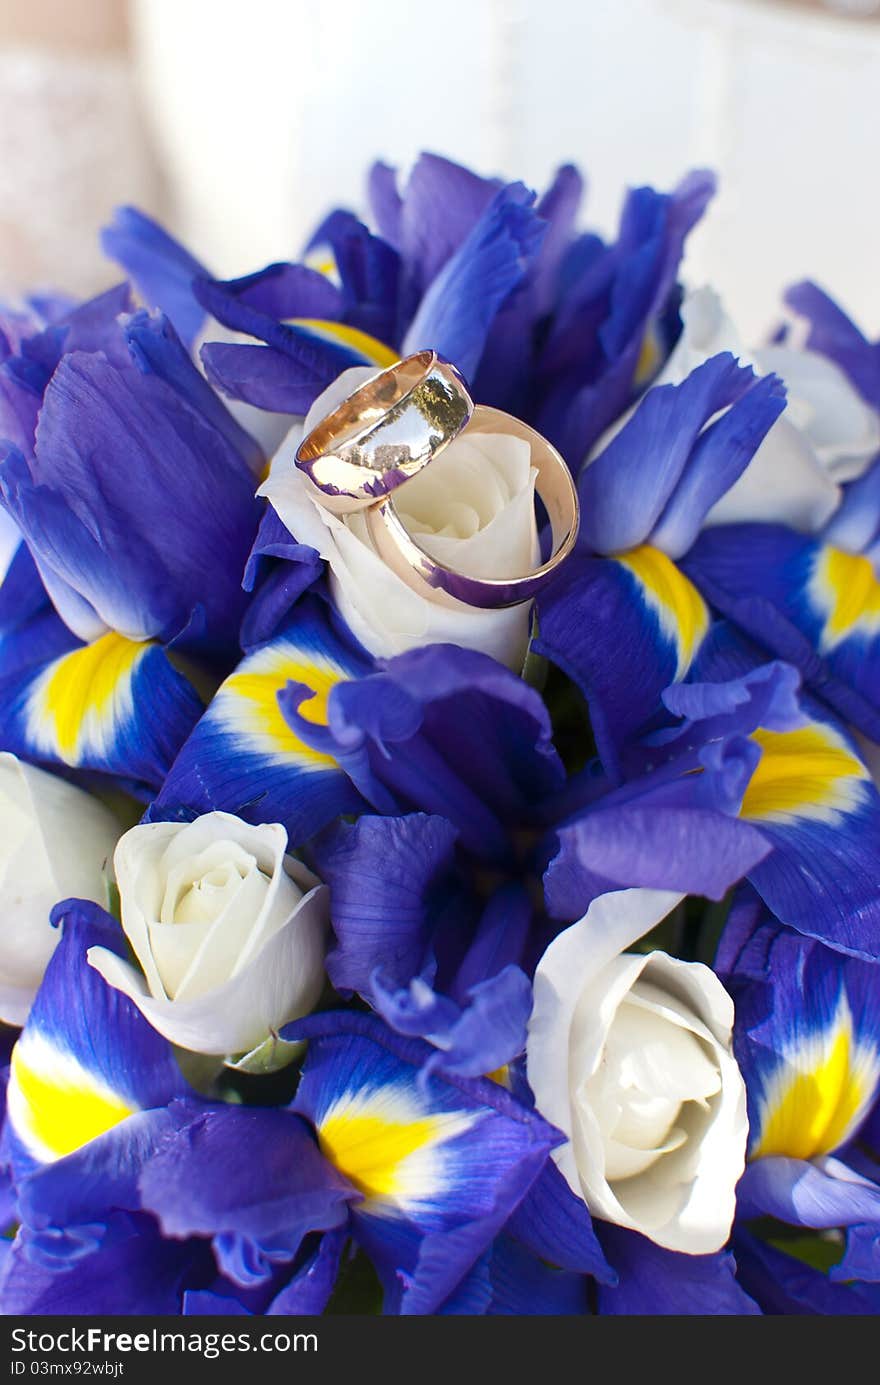 Wedding rings on wedding bouquet of irises